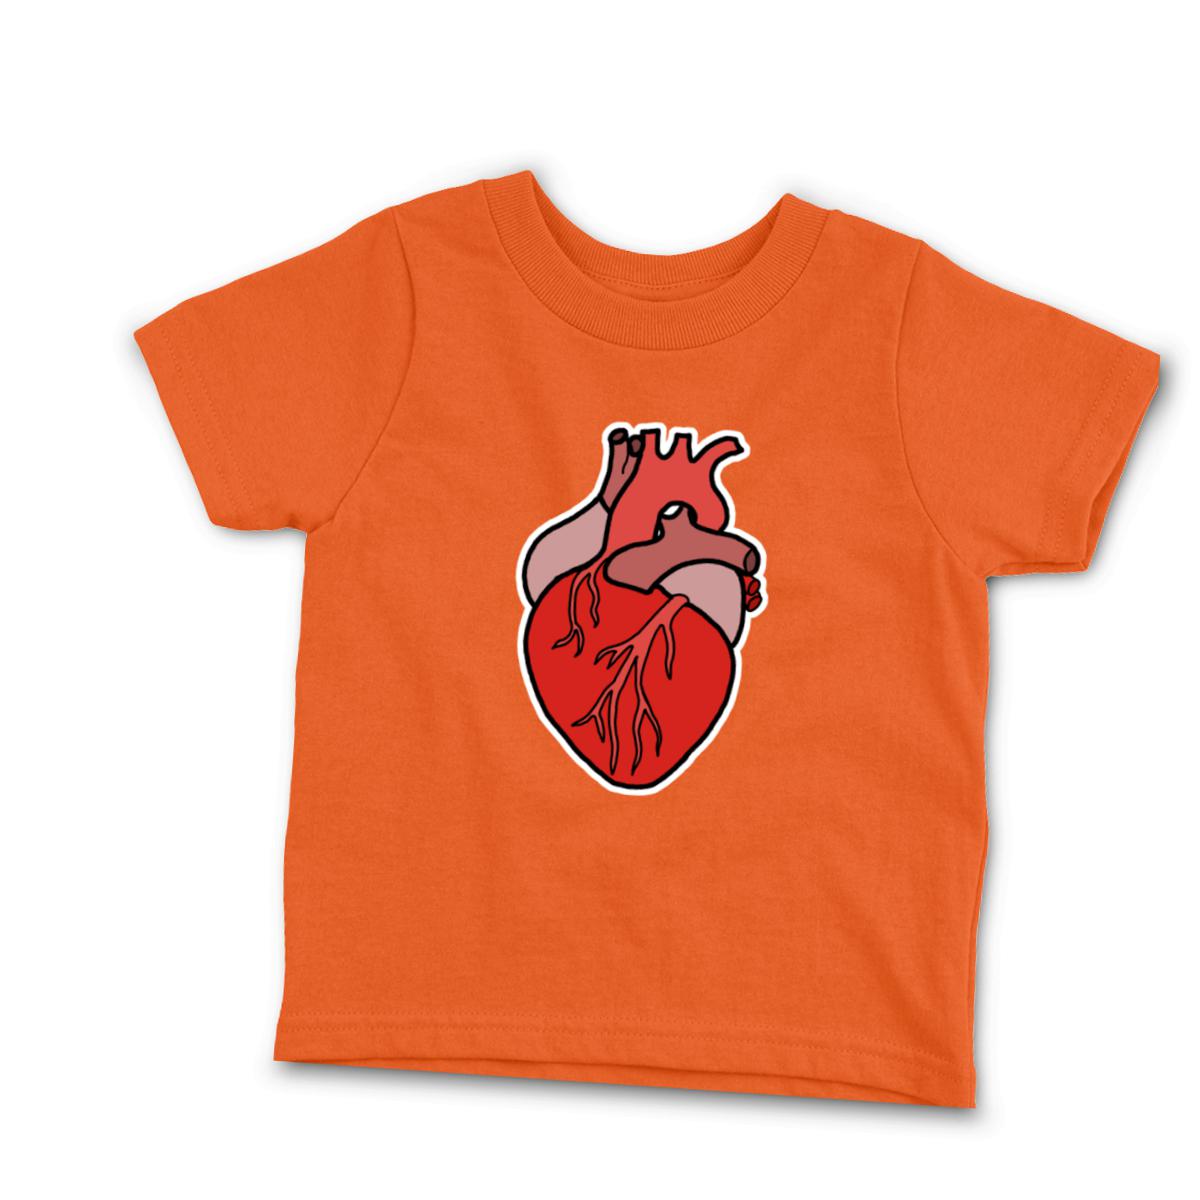 Illustrative Heart Toddler Tee 56T orange